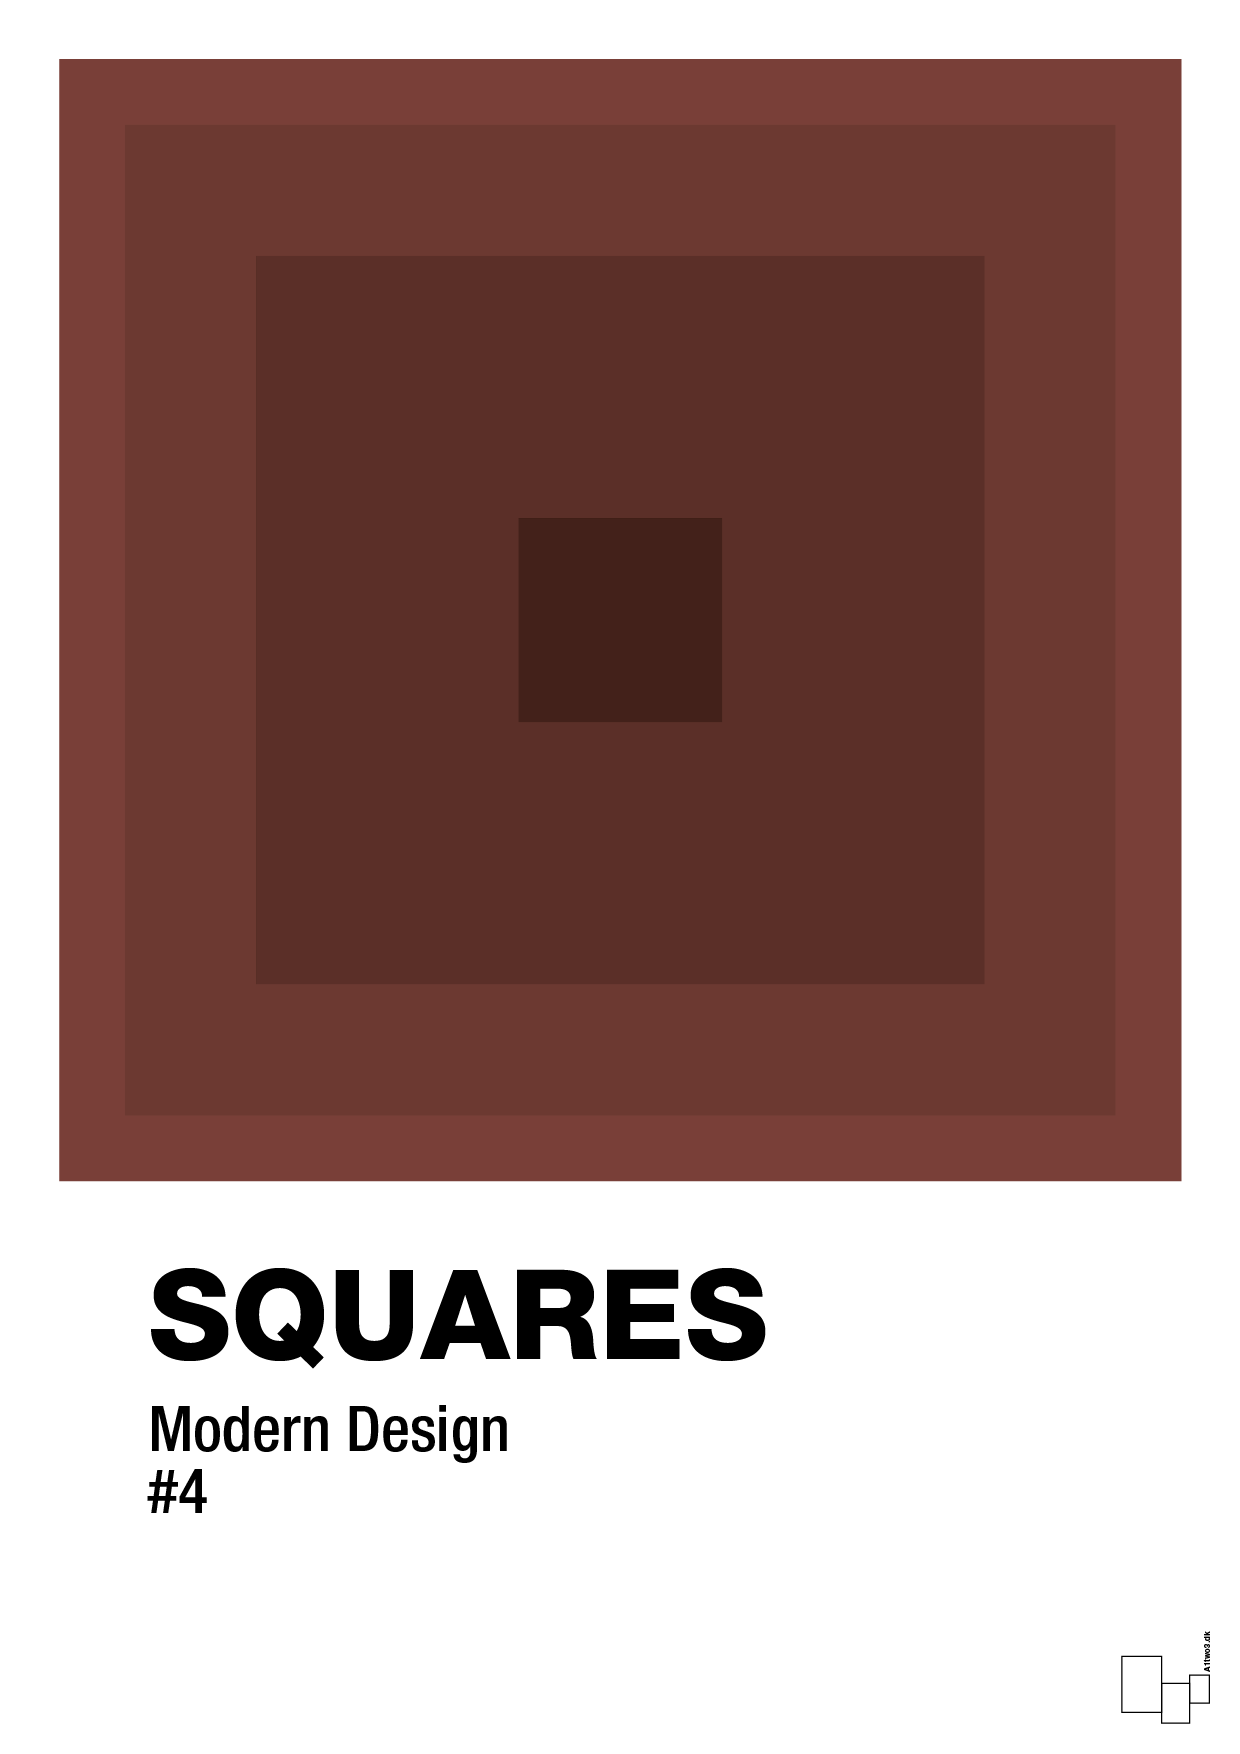 squares #4 - Plakat med Grafik i Red Pepper